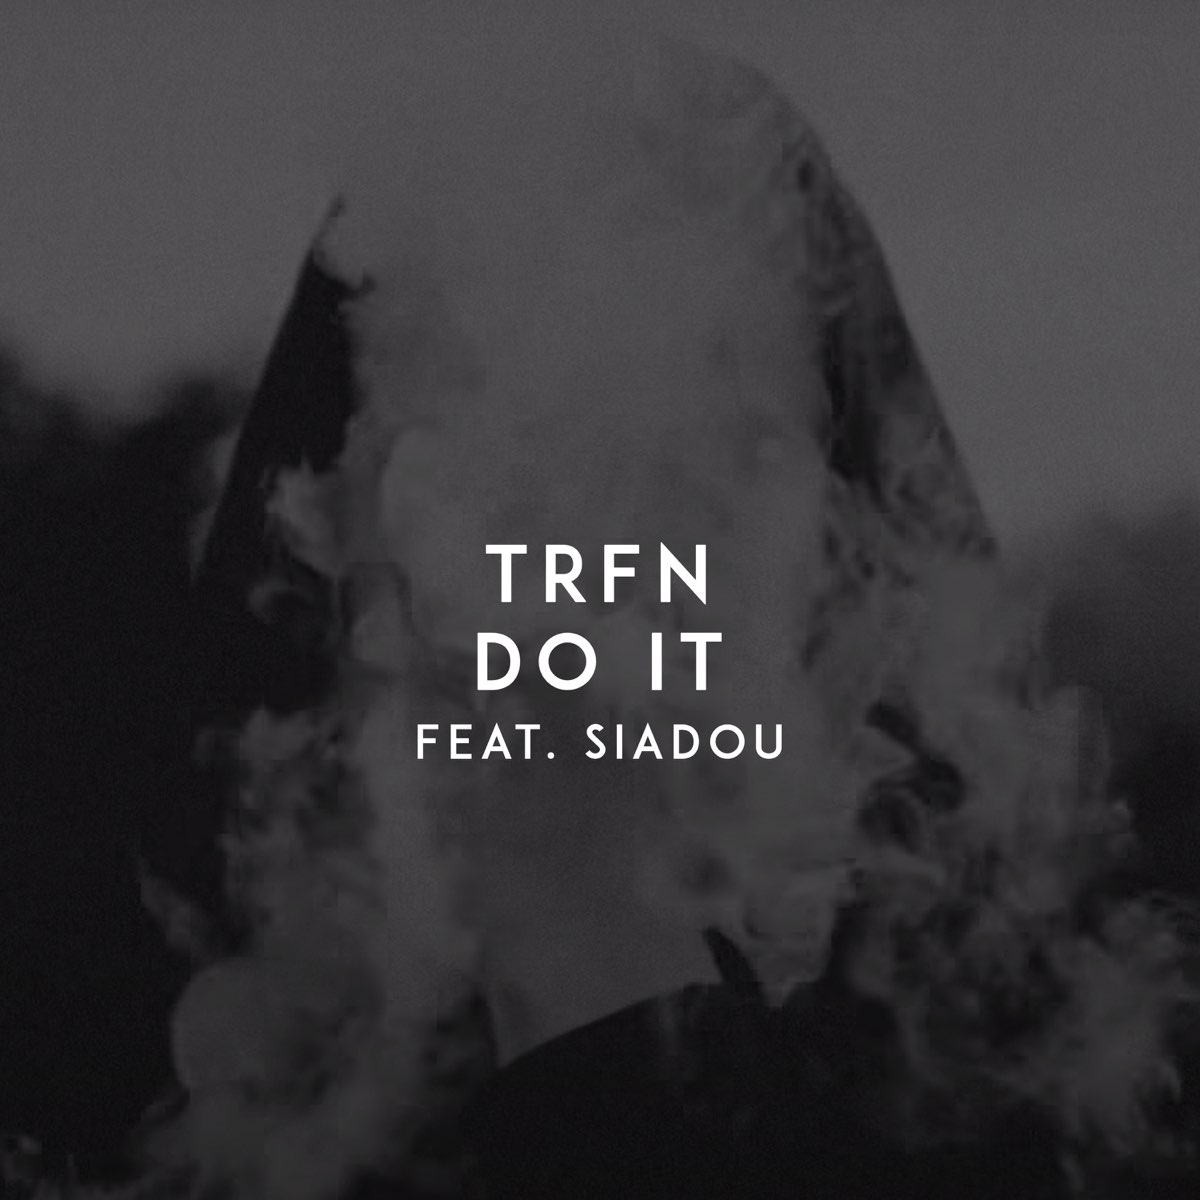 Do It (feat. Siadou) - Single - Album by TRFN - Apple Music